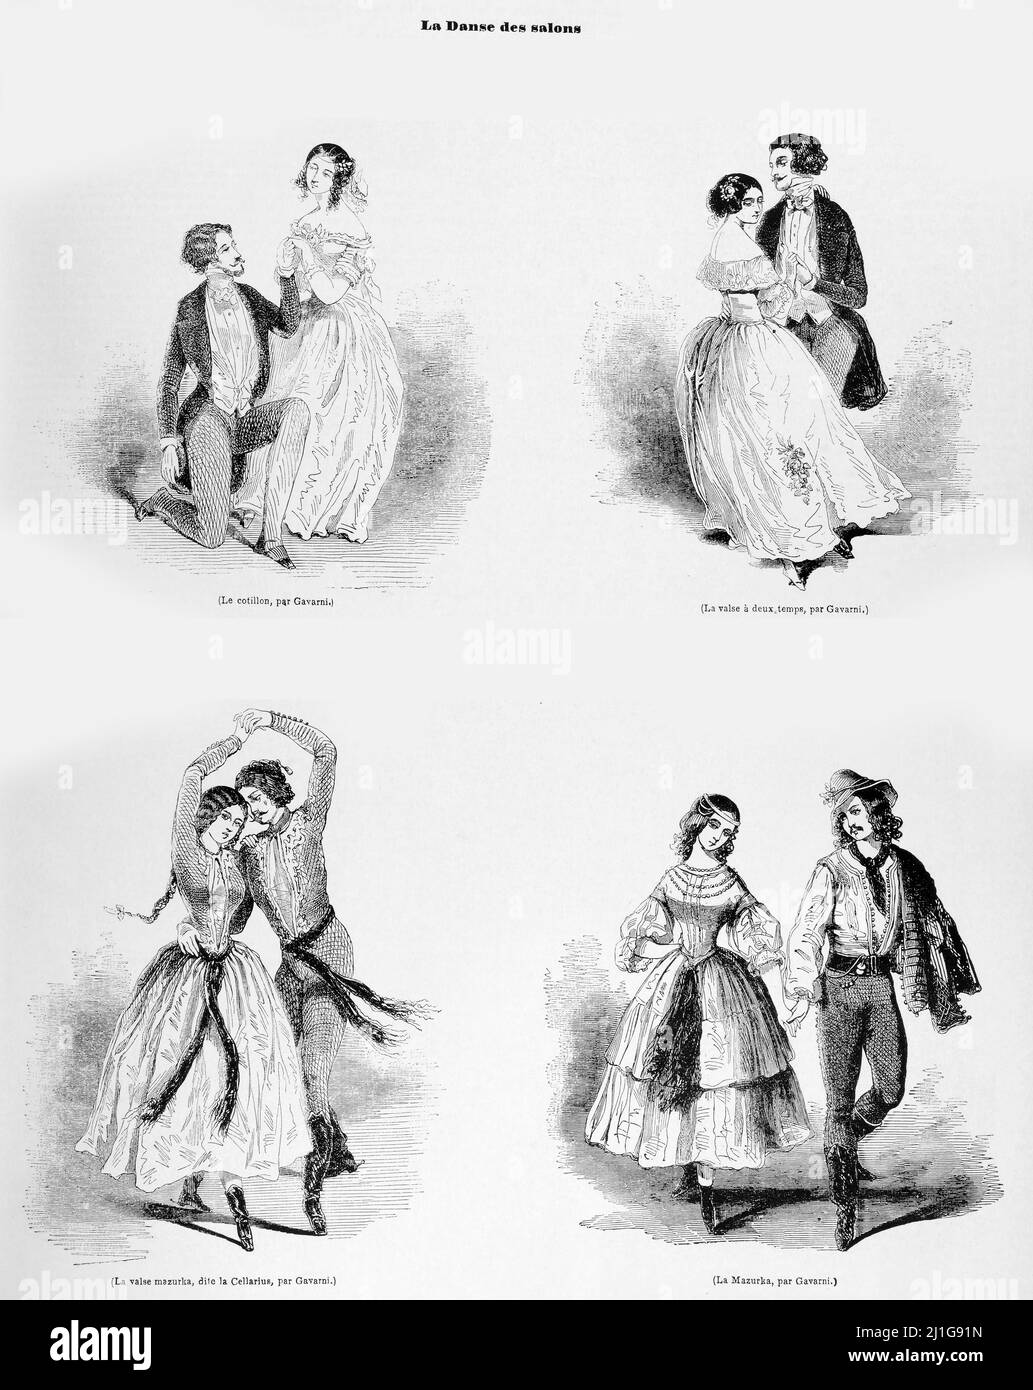 Eng translation : ' 'The Ballroom Dance (Le cotillion, by Gavarni,) (La valse à deux temps, by Gavarni.) (La valse mazurka, dit la Cellarius, by Gavarni.) (La Mazurka, by Gavarni.)' ' - Original in French : ' La Danse des salons (Le cotillon, par Gavarni,) (La valse à deux temps, par Gavarni.) (La valse mazurka, dite la Cellarius, par Gavarni.) (La Mazurka, par Gavarni.) ' - Extract from 'L'Illustration Journal Universel' - French illustrated magazine - 1846 Stock Photo